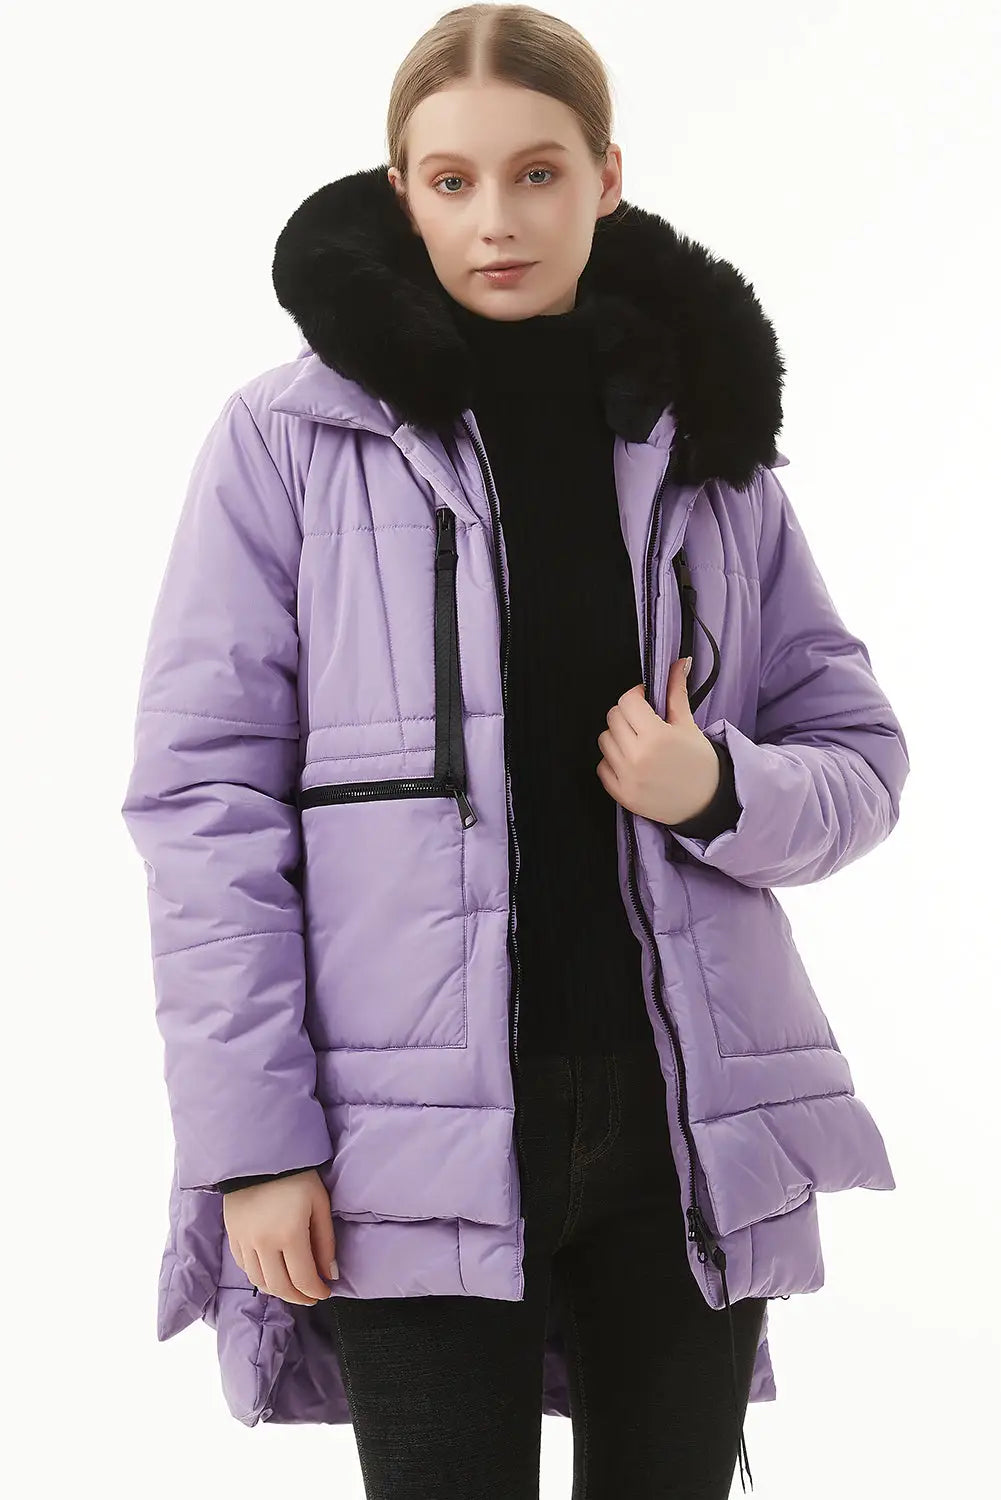 Wisteria plush linen zip up hooded puffer coat - 2xl / 100% polyester - outerwear